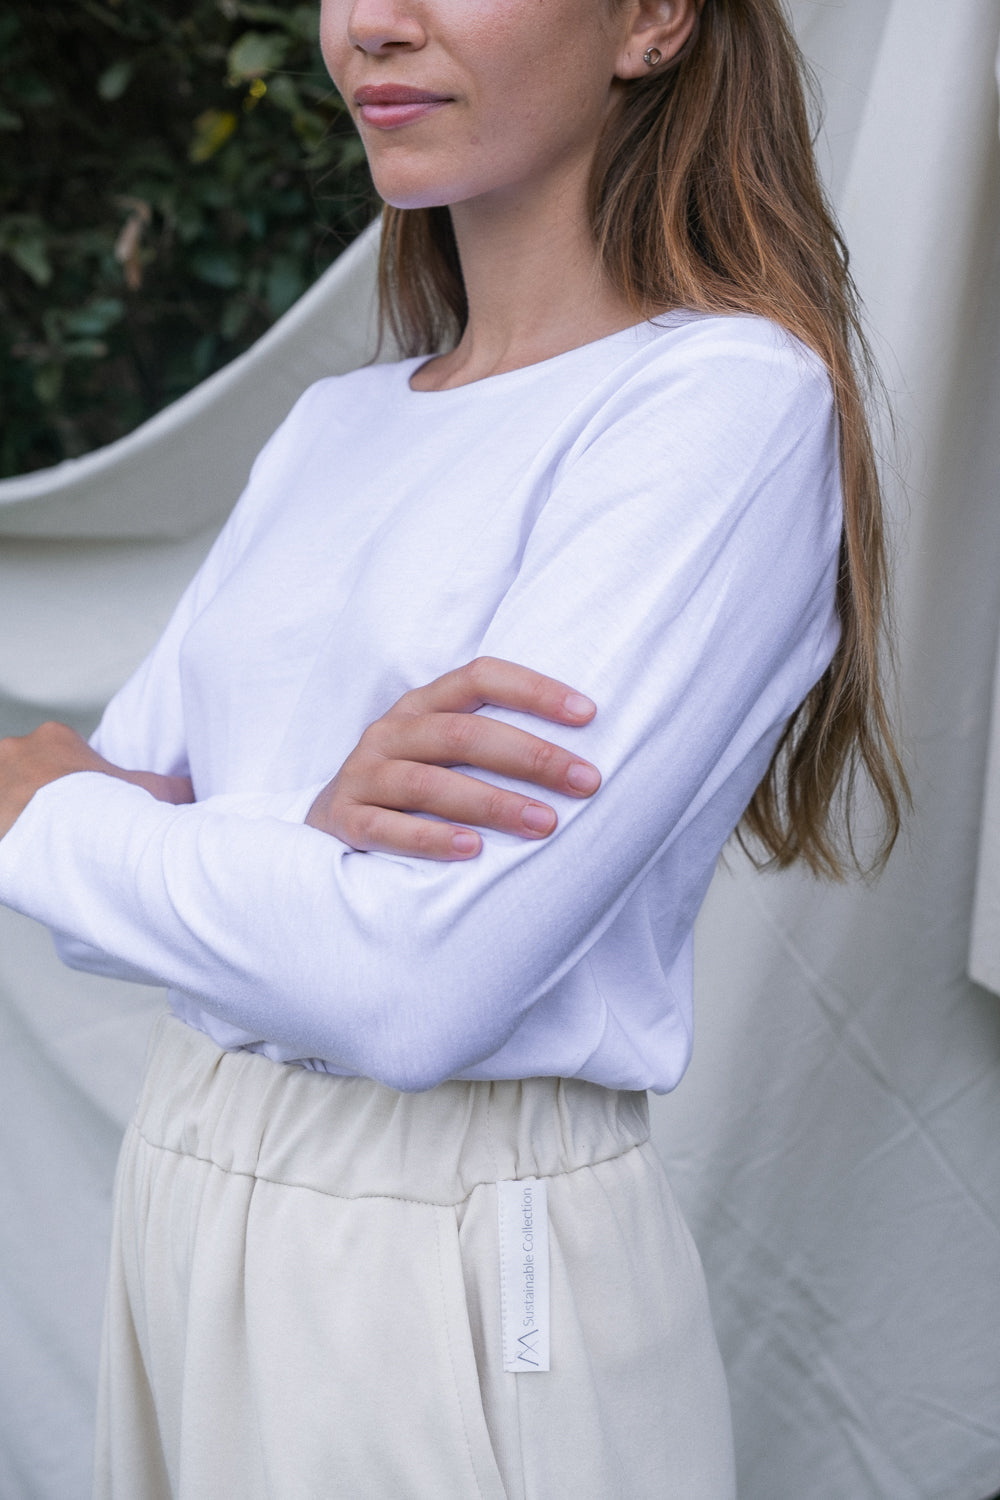 MIA Moda Regenerativa Camisetas L / blanco Camiseta Esencial mujer manga larga - blanco y natural